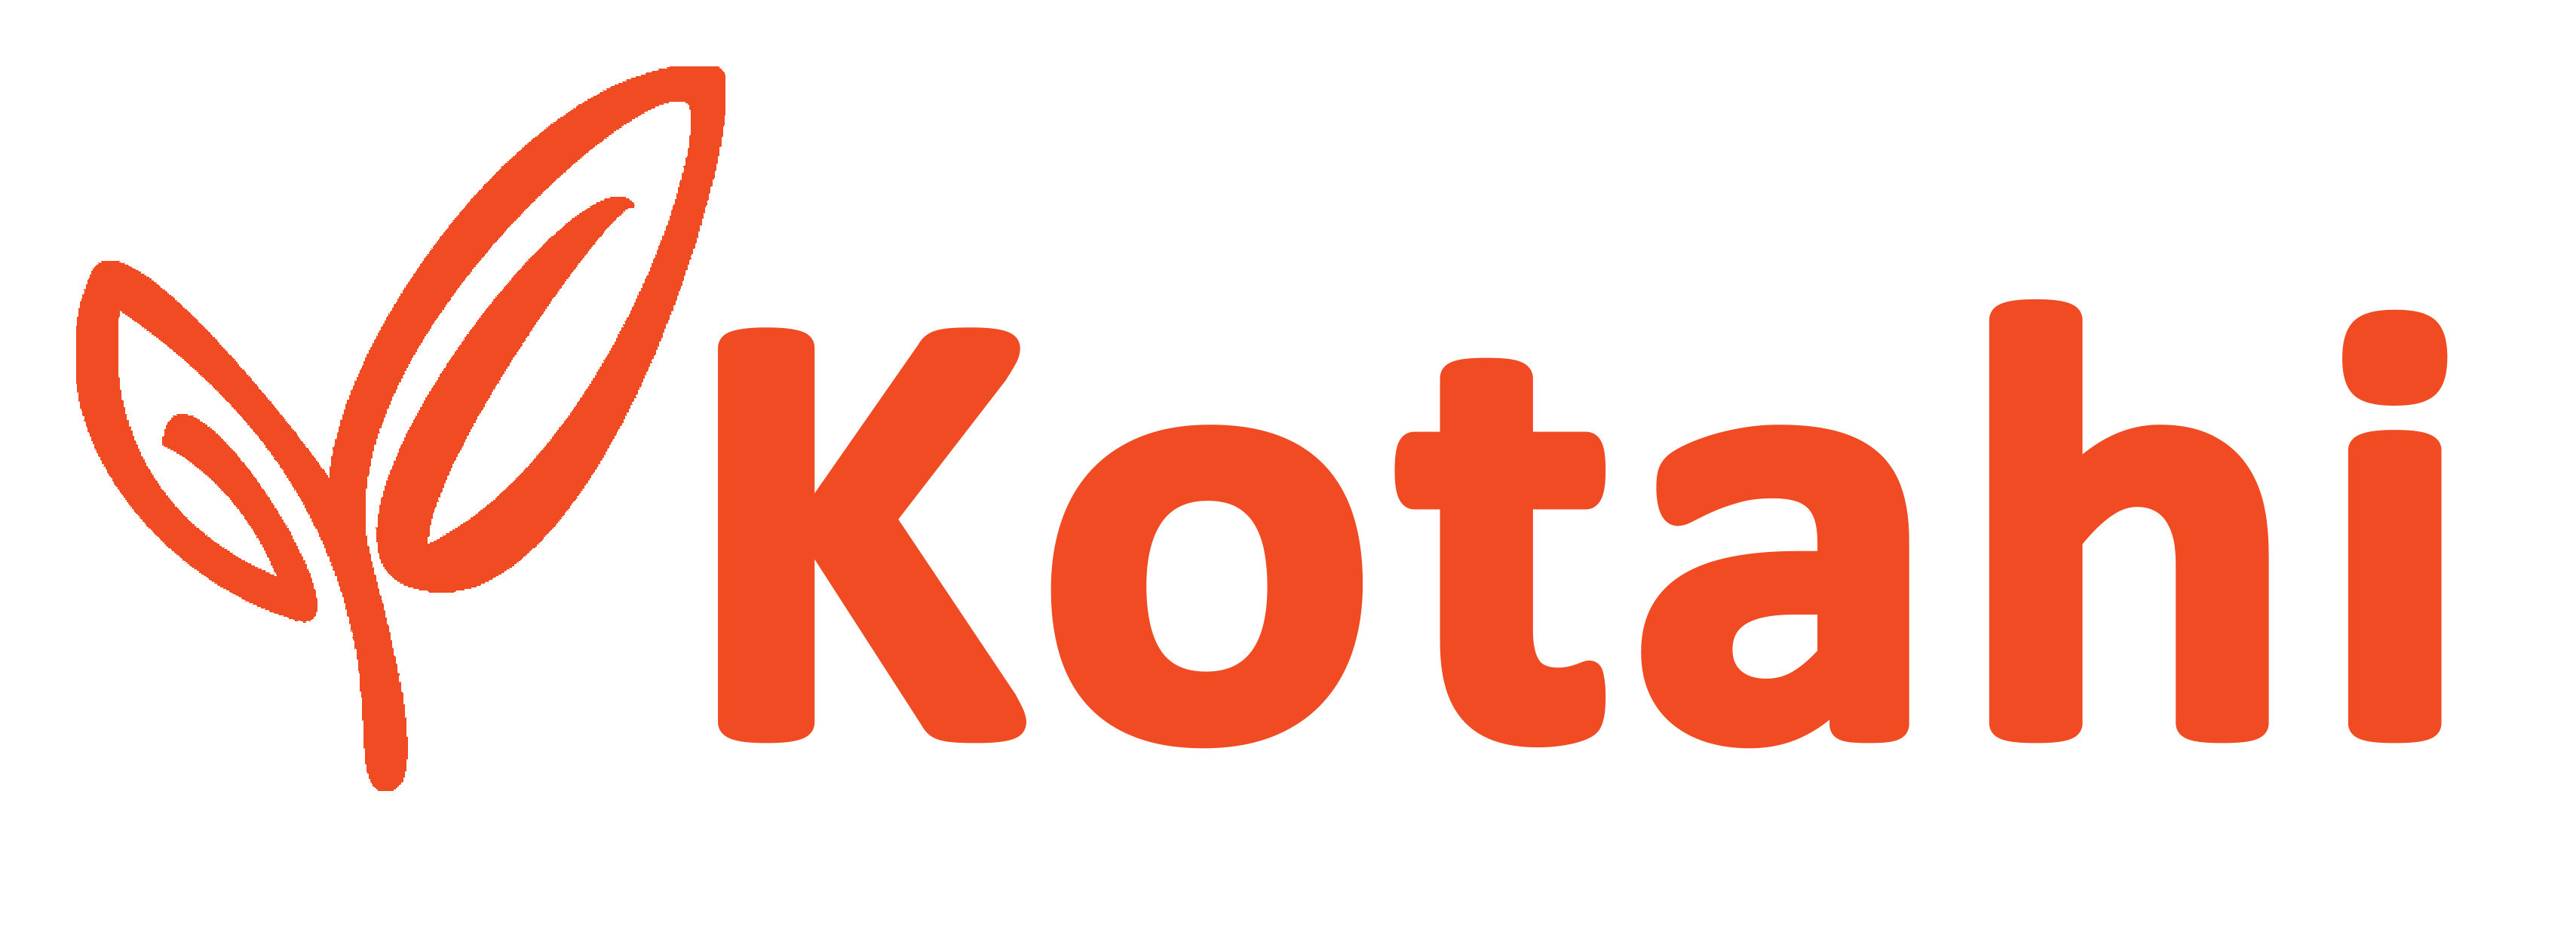 kotahi orange f24810 on trans 2021 no headers